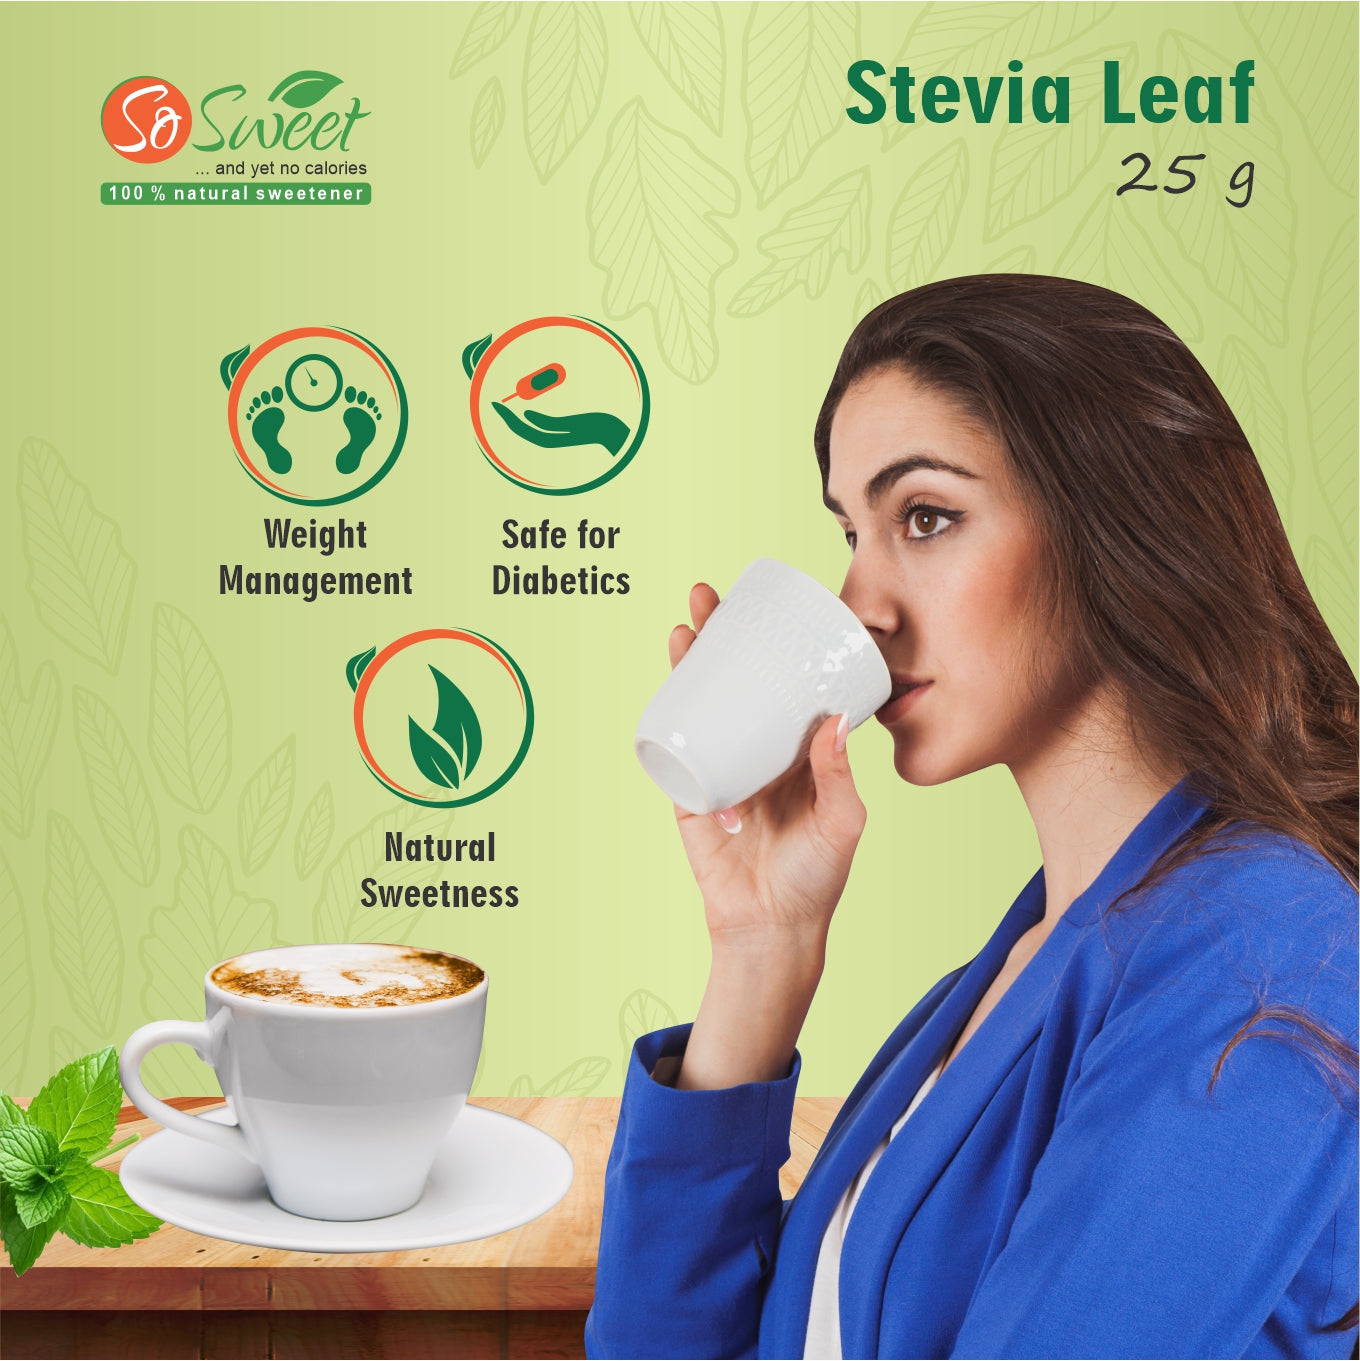 So Sweet Stevia Leaf Sugar Free Natural Zero Calorie Sweetener Pack of 4 (25gm each)